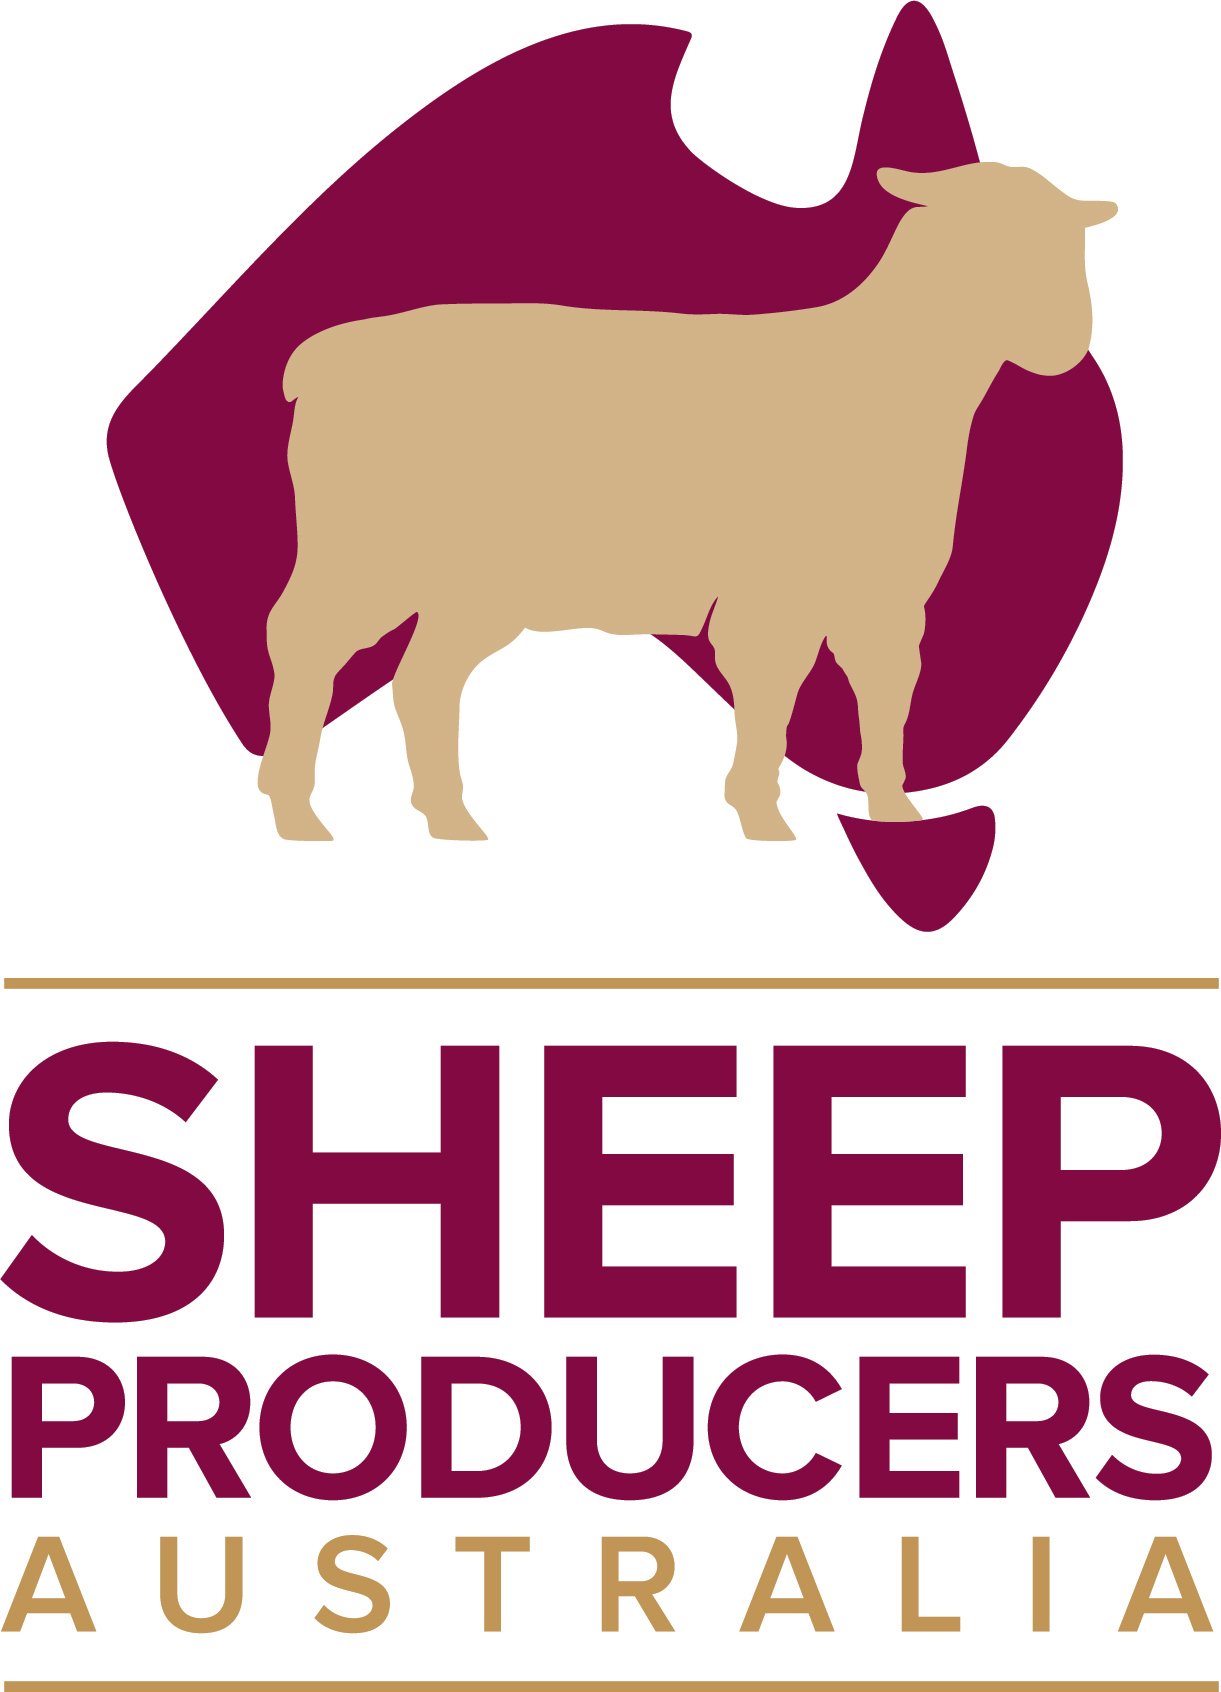 Sheep Producers Australia logo